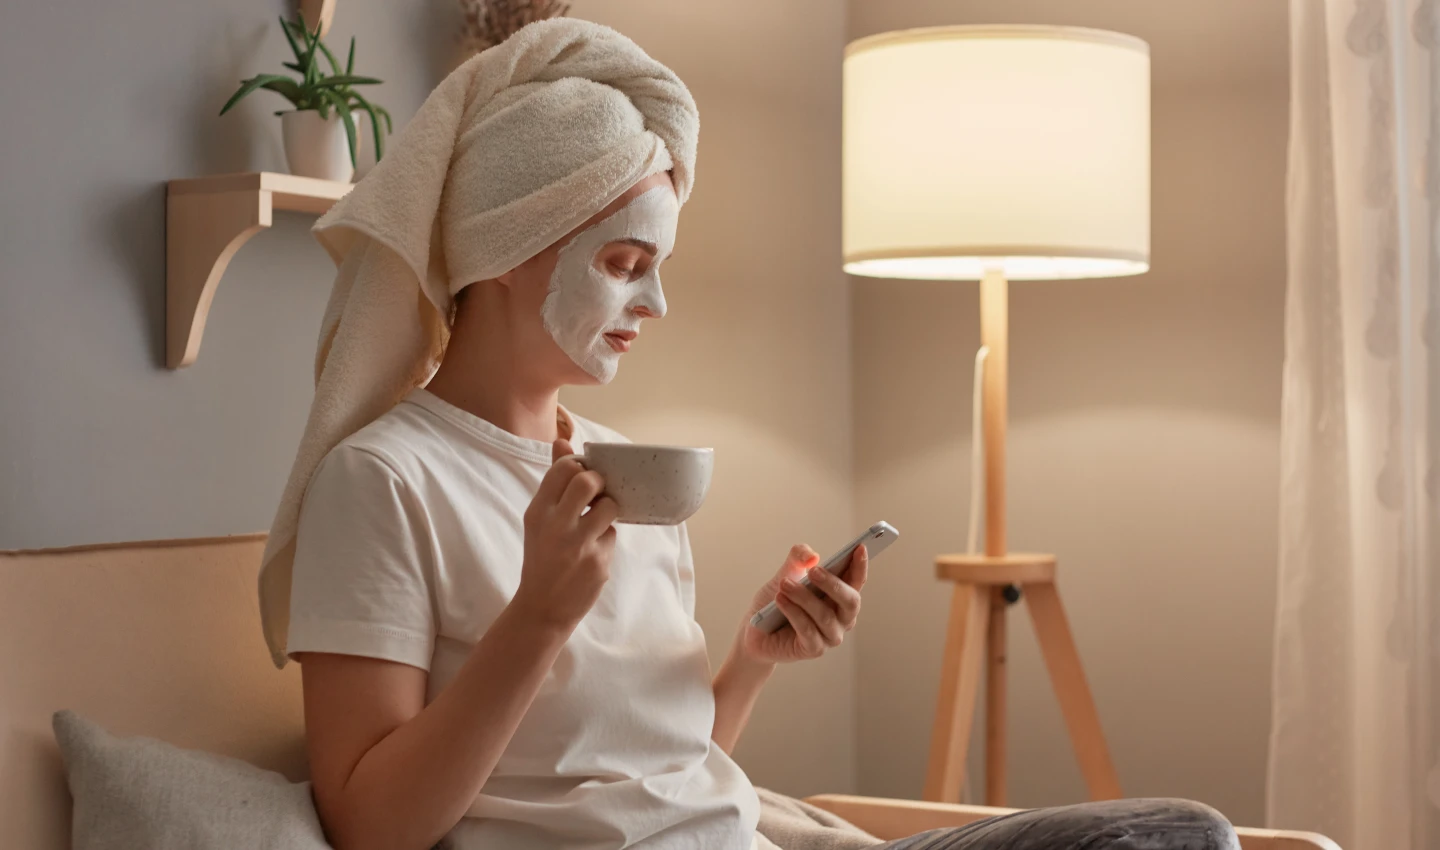 Woman applying night moisturiser cream to her face, promoting radiant skin through nighttime skincare.